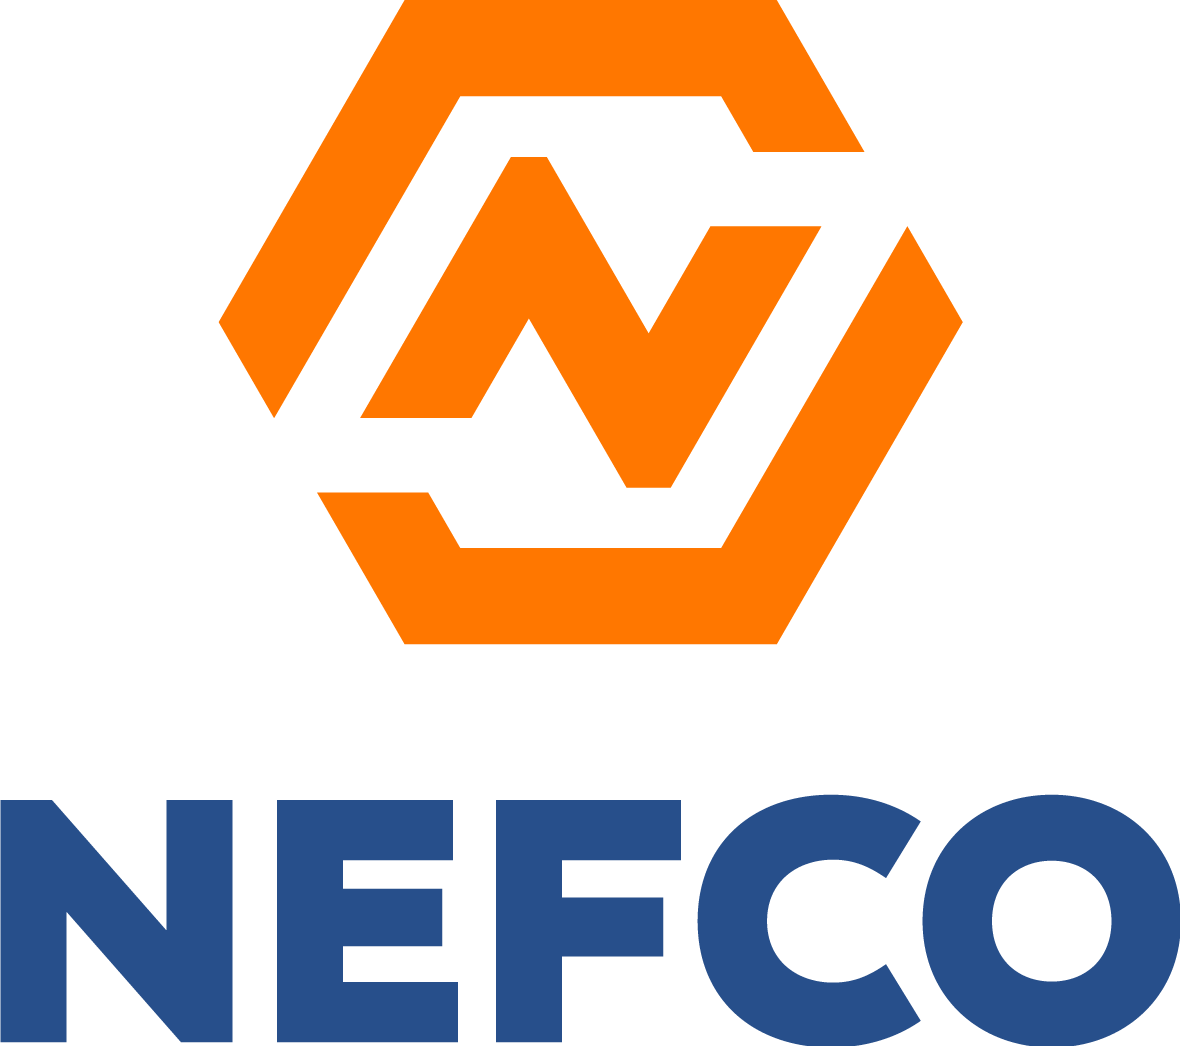 NEFCO Announces Strategic Acquisition of Unicoa